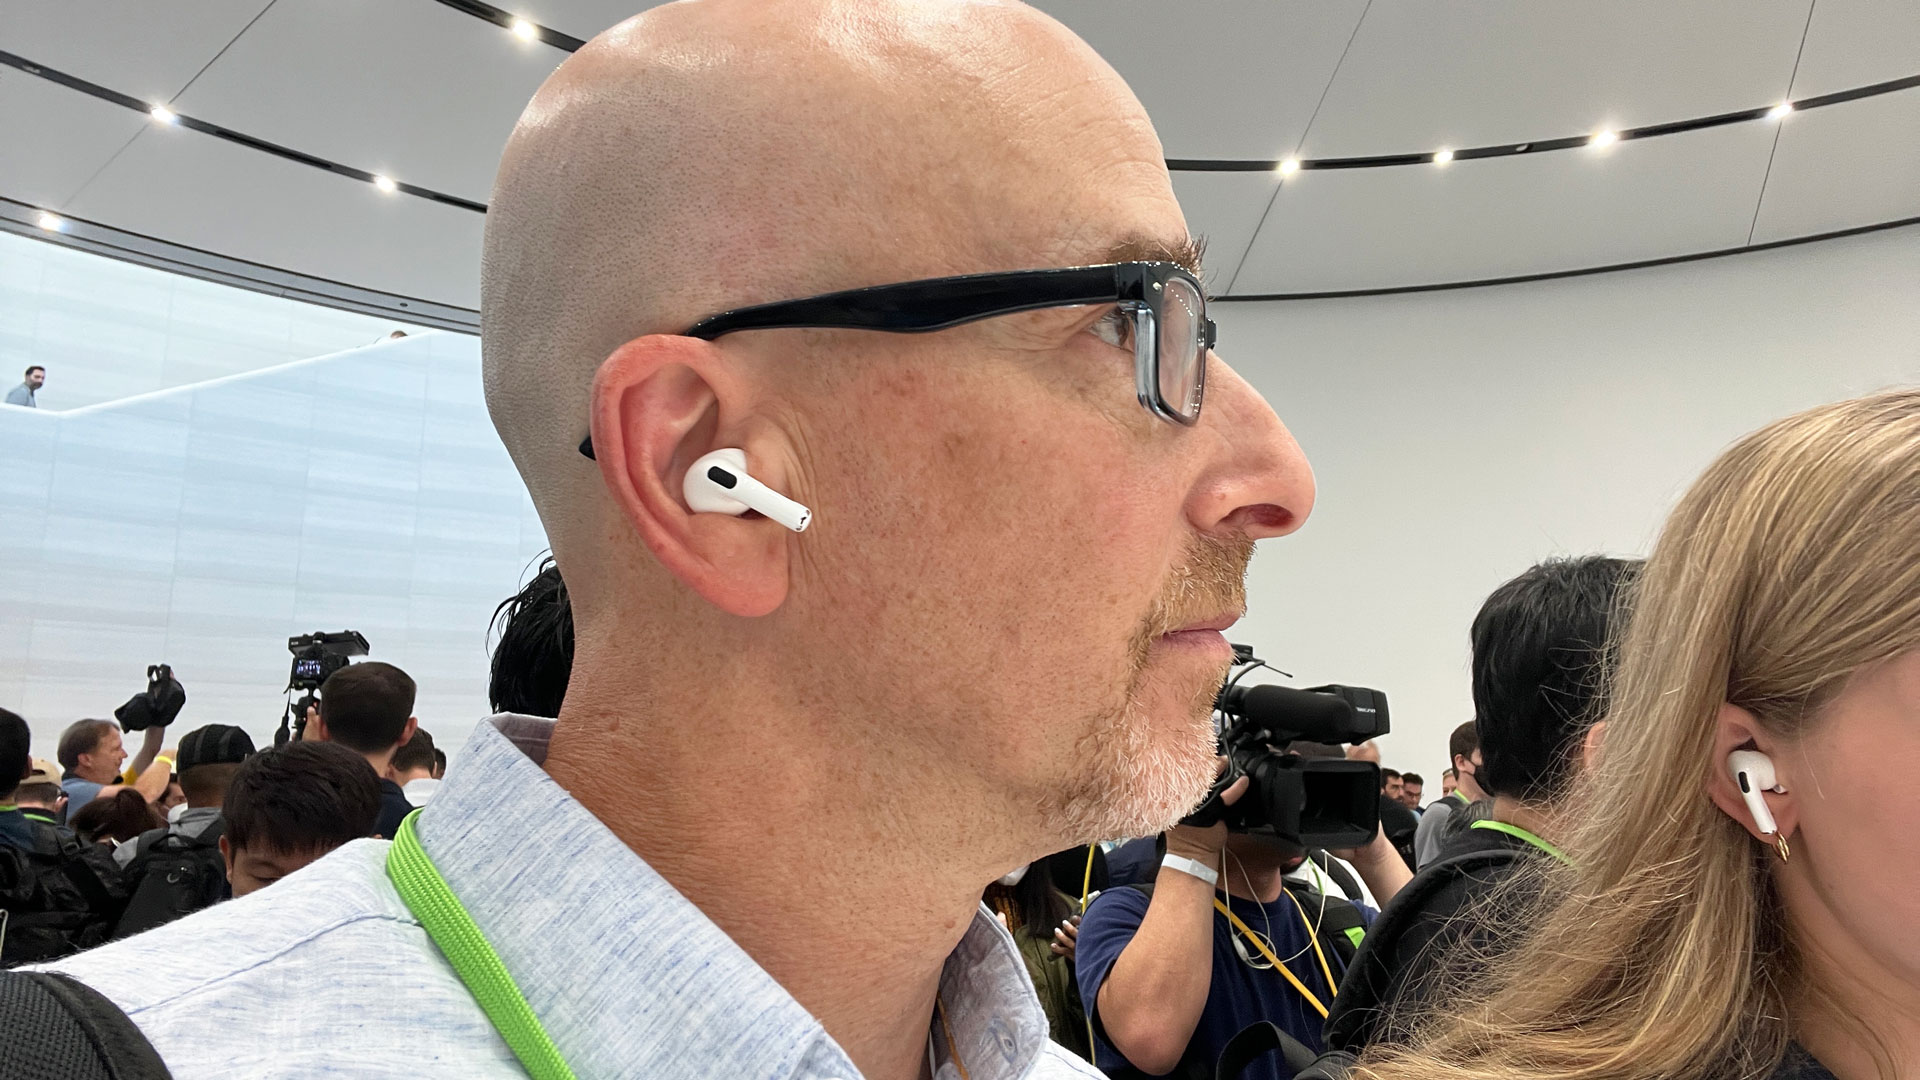 Apple AirPods Pro 2 in ear